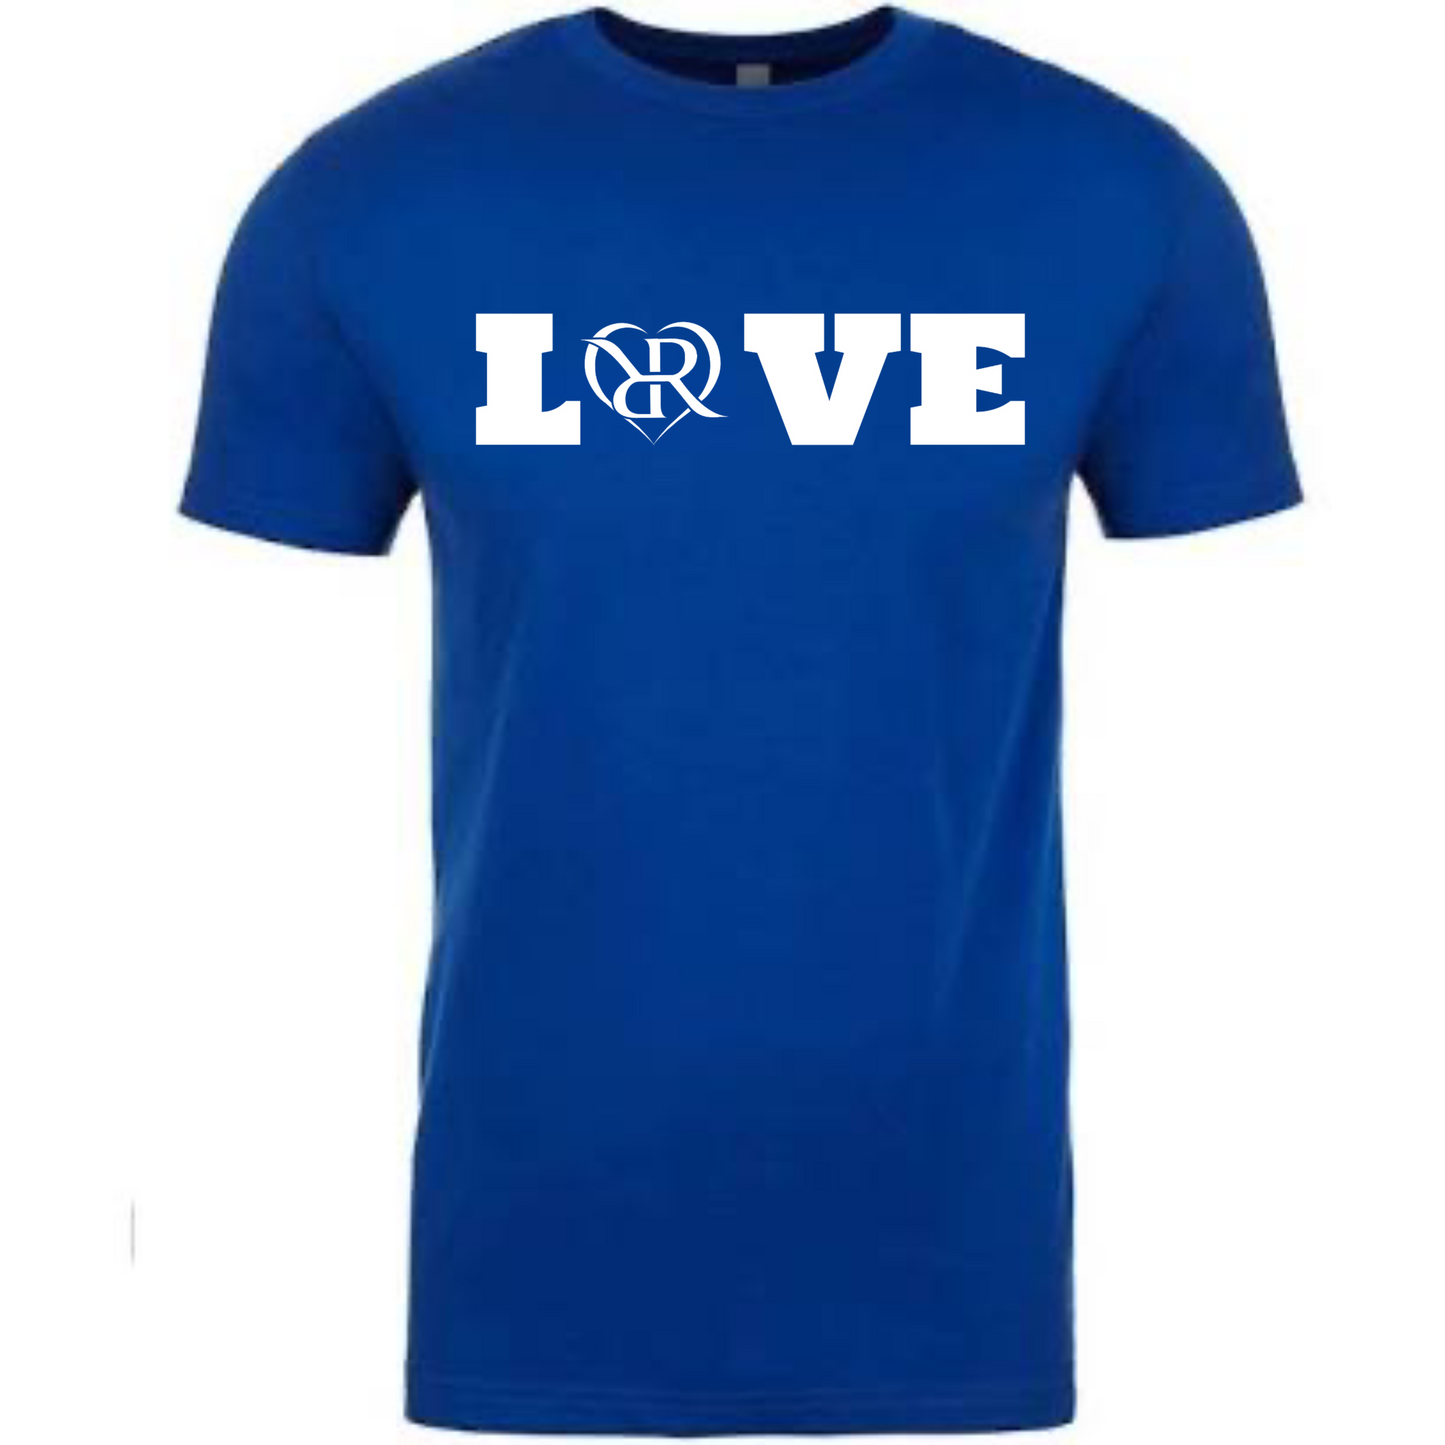 The "LOVE" T Shirt